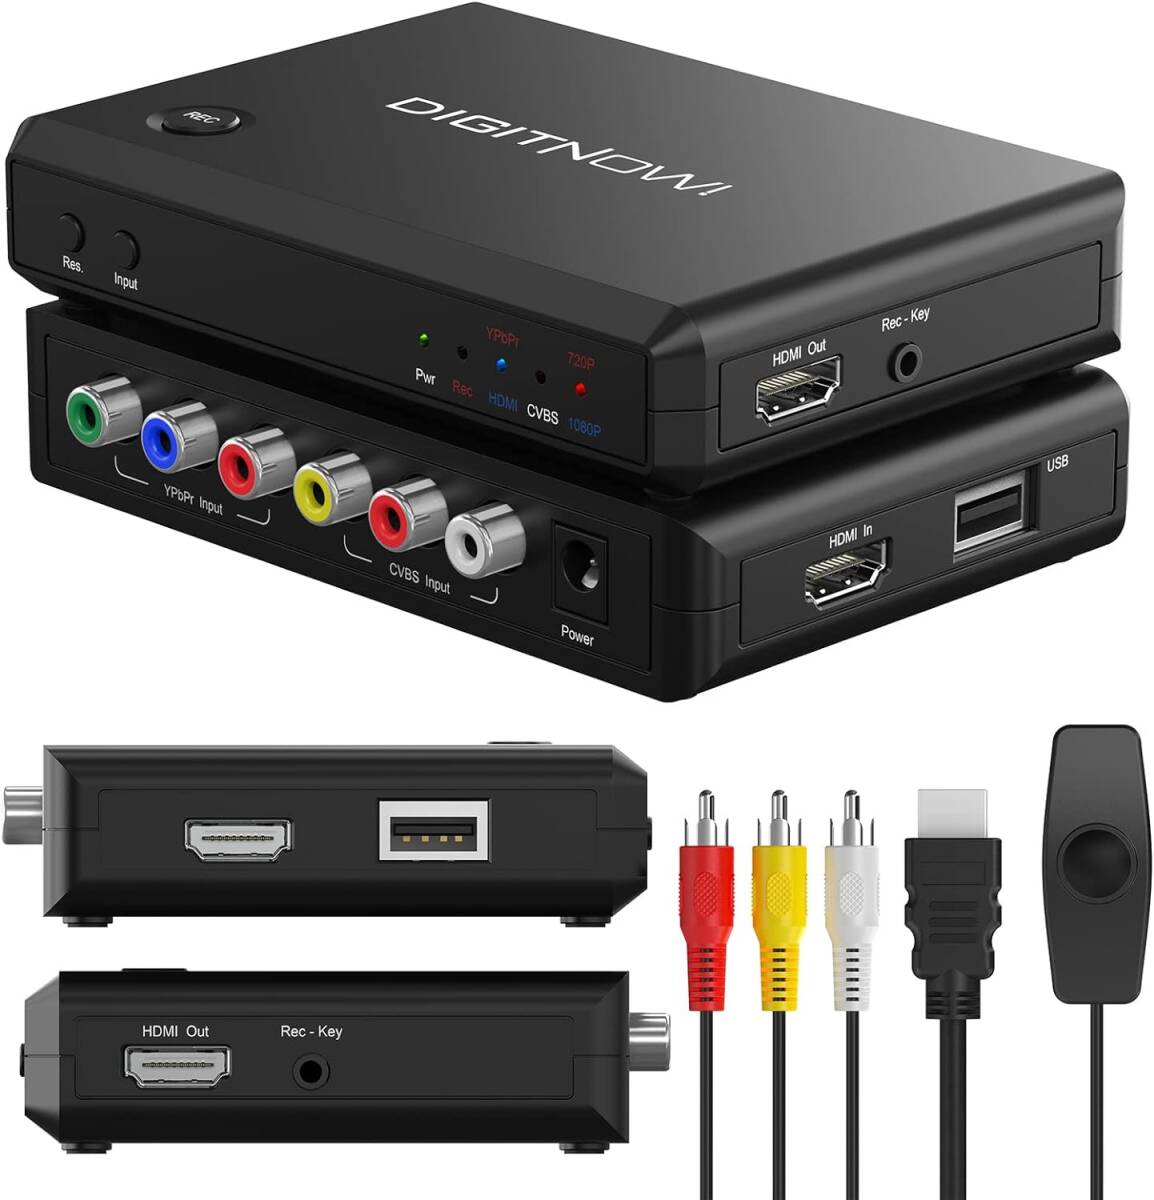 HD game cap tea /HDMI video converter / recorder PS4 Xbox One/Xbox 360 LiveTV PVR DVR etc. HDMI/CVBS input .HDMI output . correspondence full HD